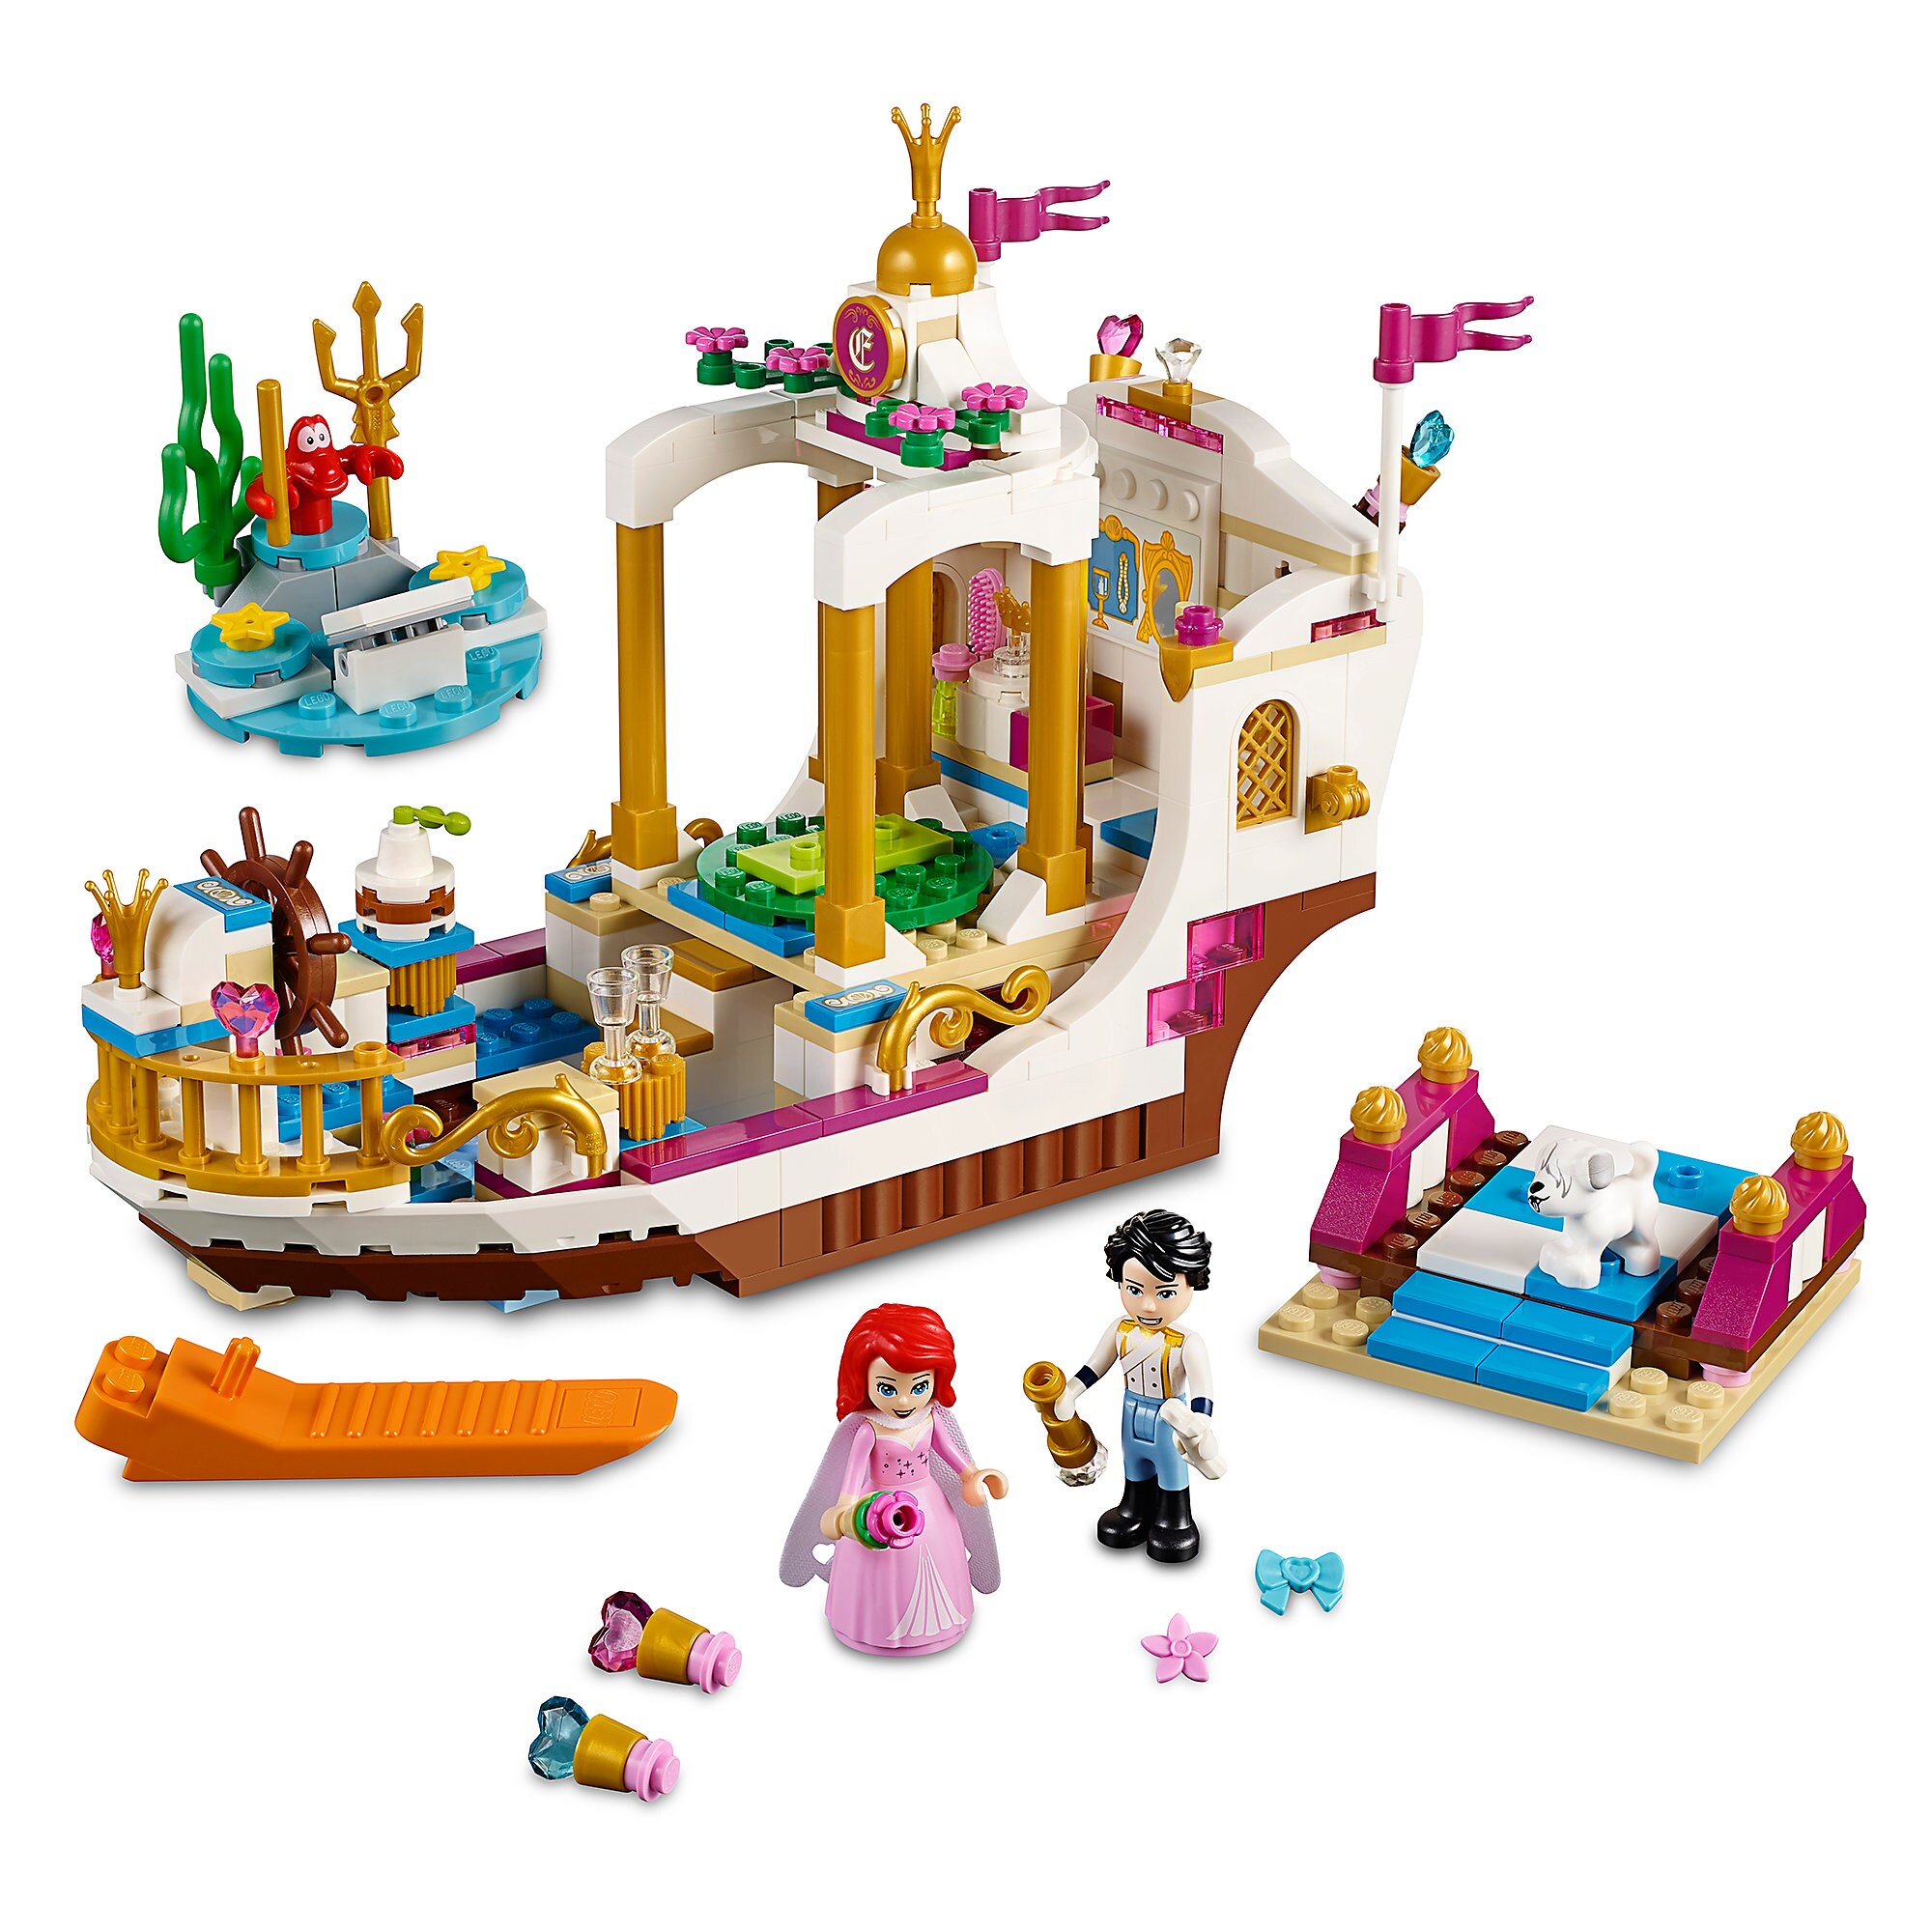 Ariel's Royal Celebration Boat Playset by LEGO